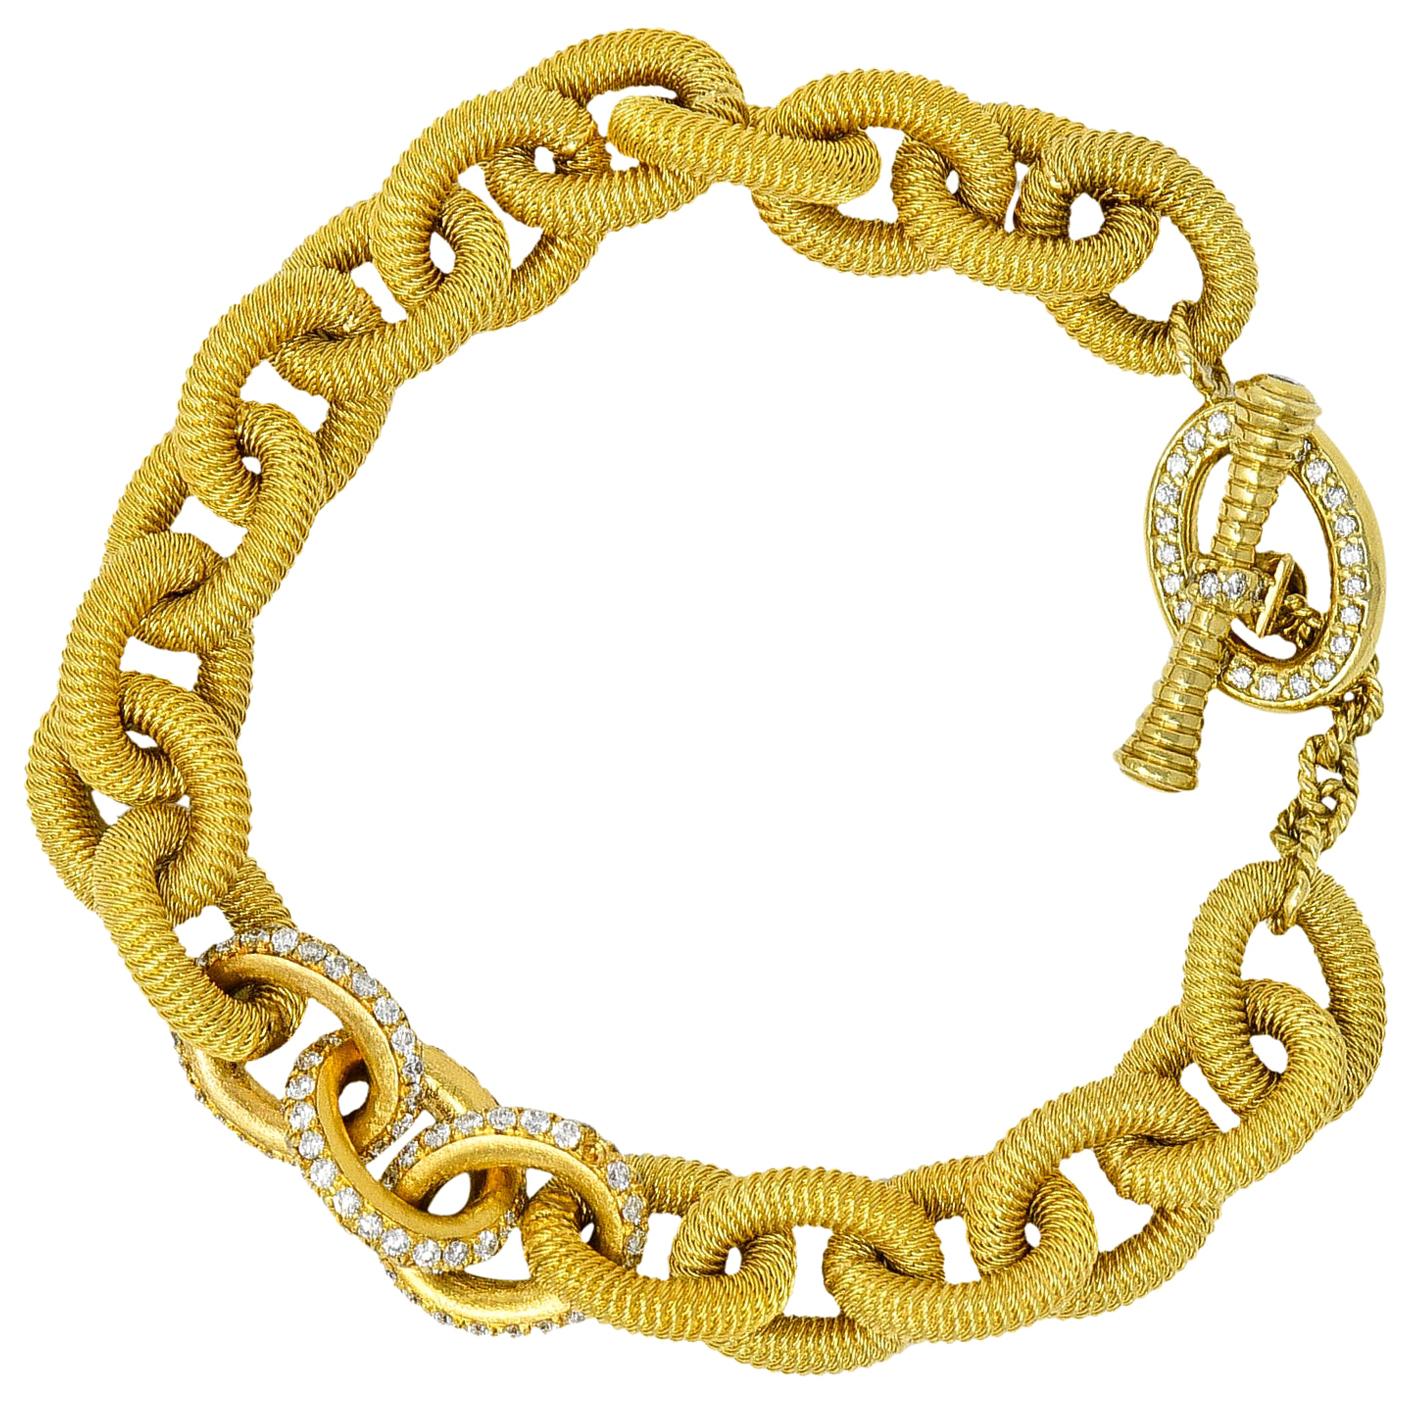 1.75 Carat Pave Diamond 18 Karat Gold Curb Link Toggle Bracelet